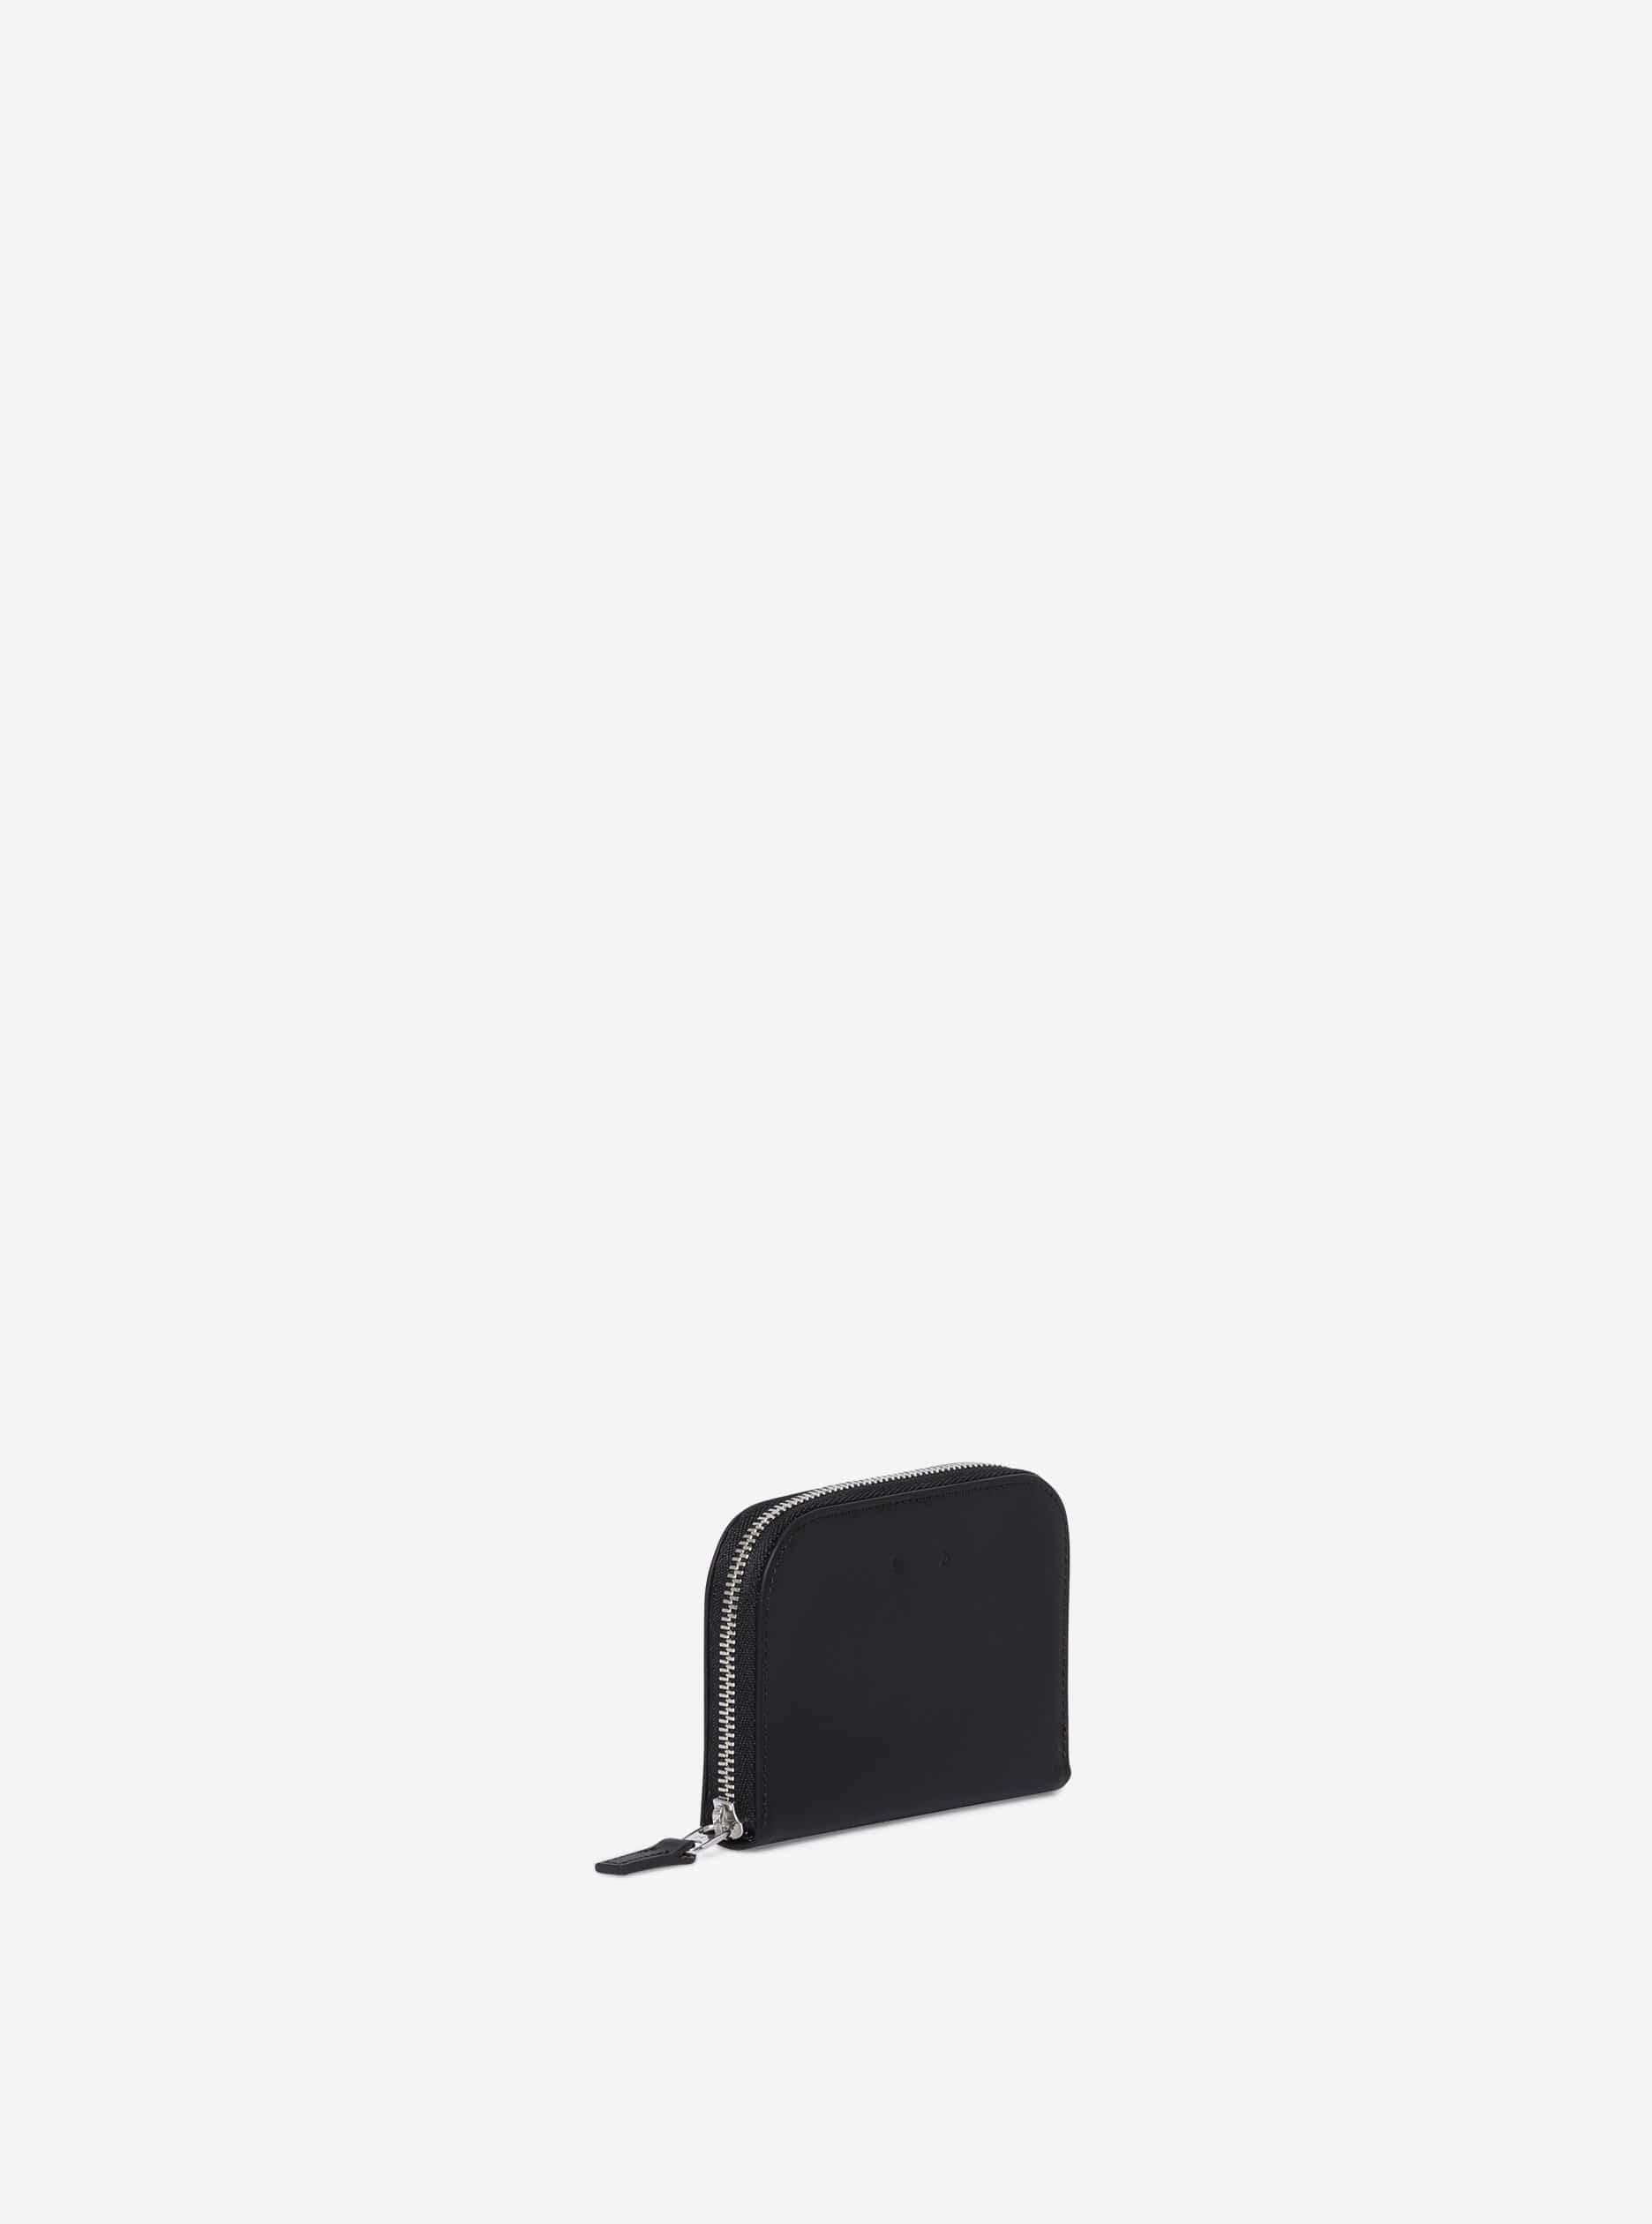 Slim card case - CM 1.1 black by PB0110 – PB 0110